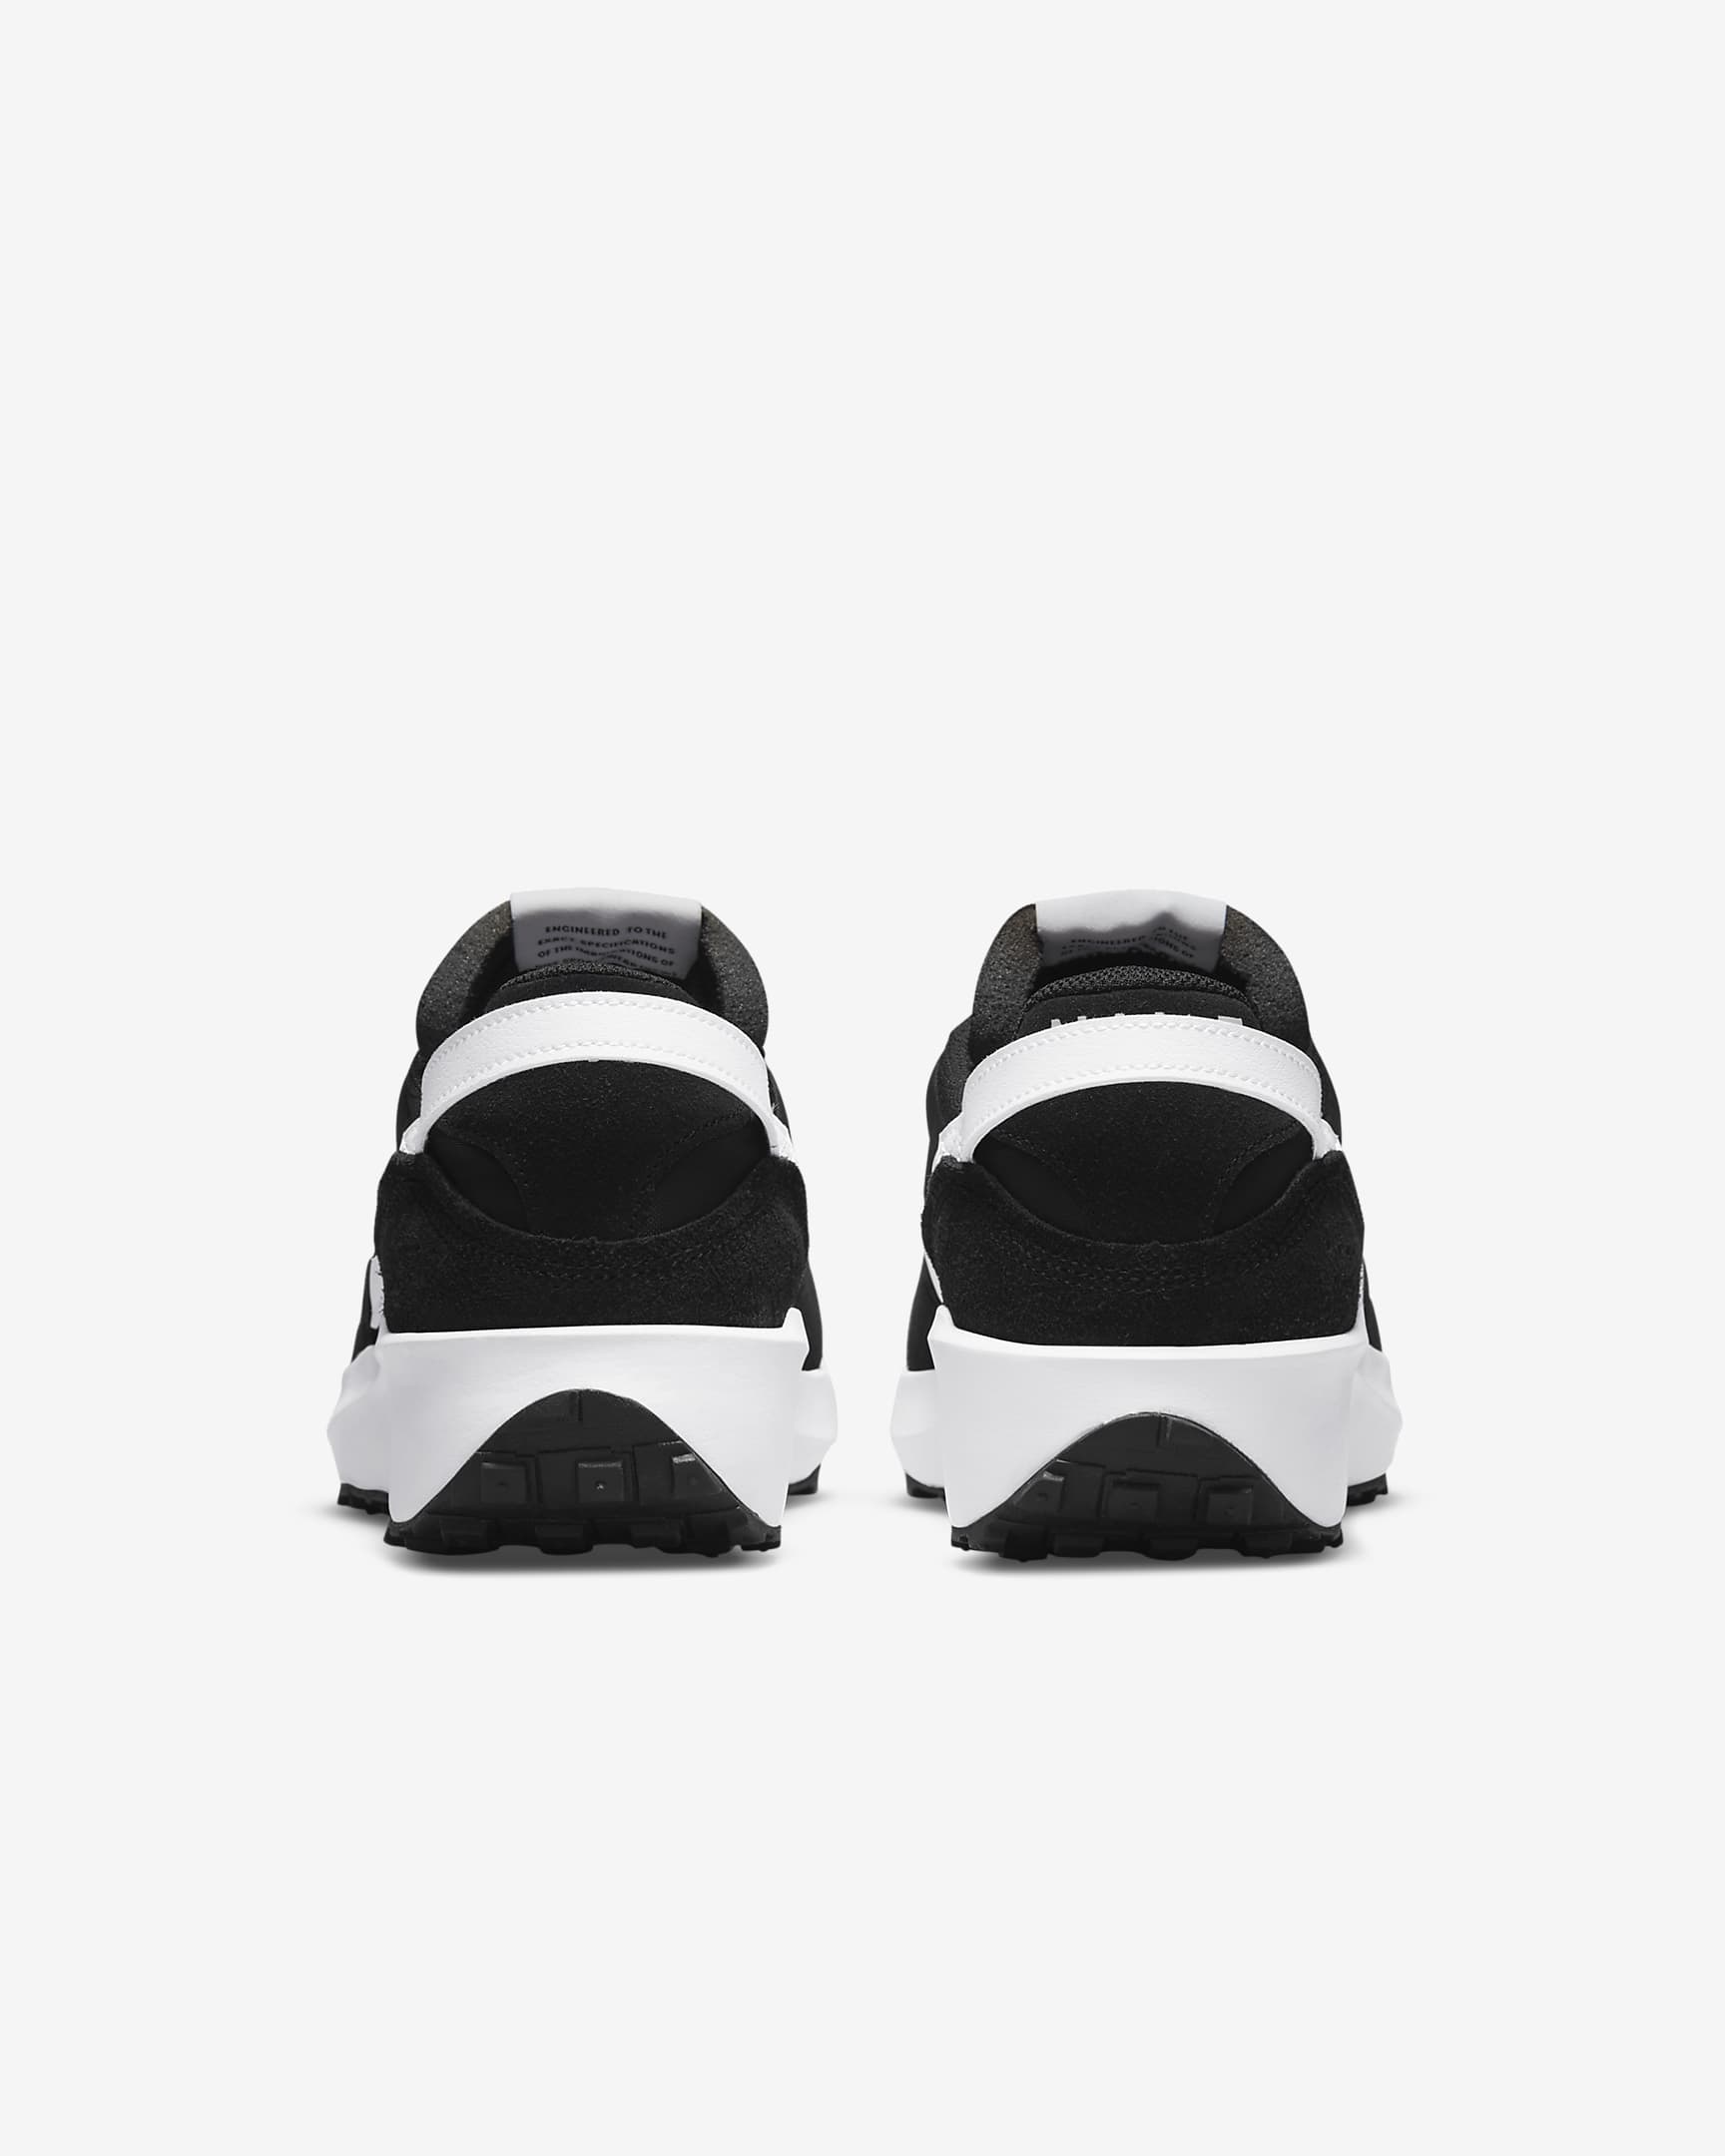 Chaussures Nike Waffle Debut pour Homme - Noir/Orange/Clear/Blanc